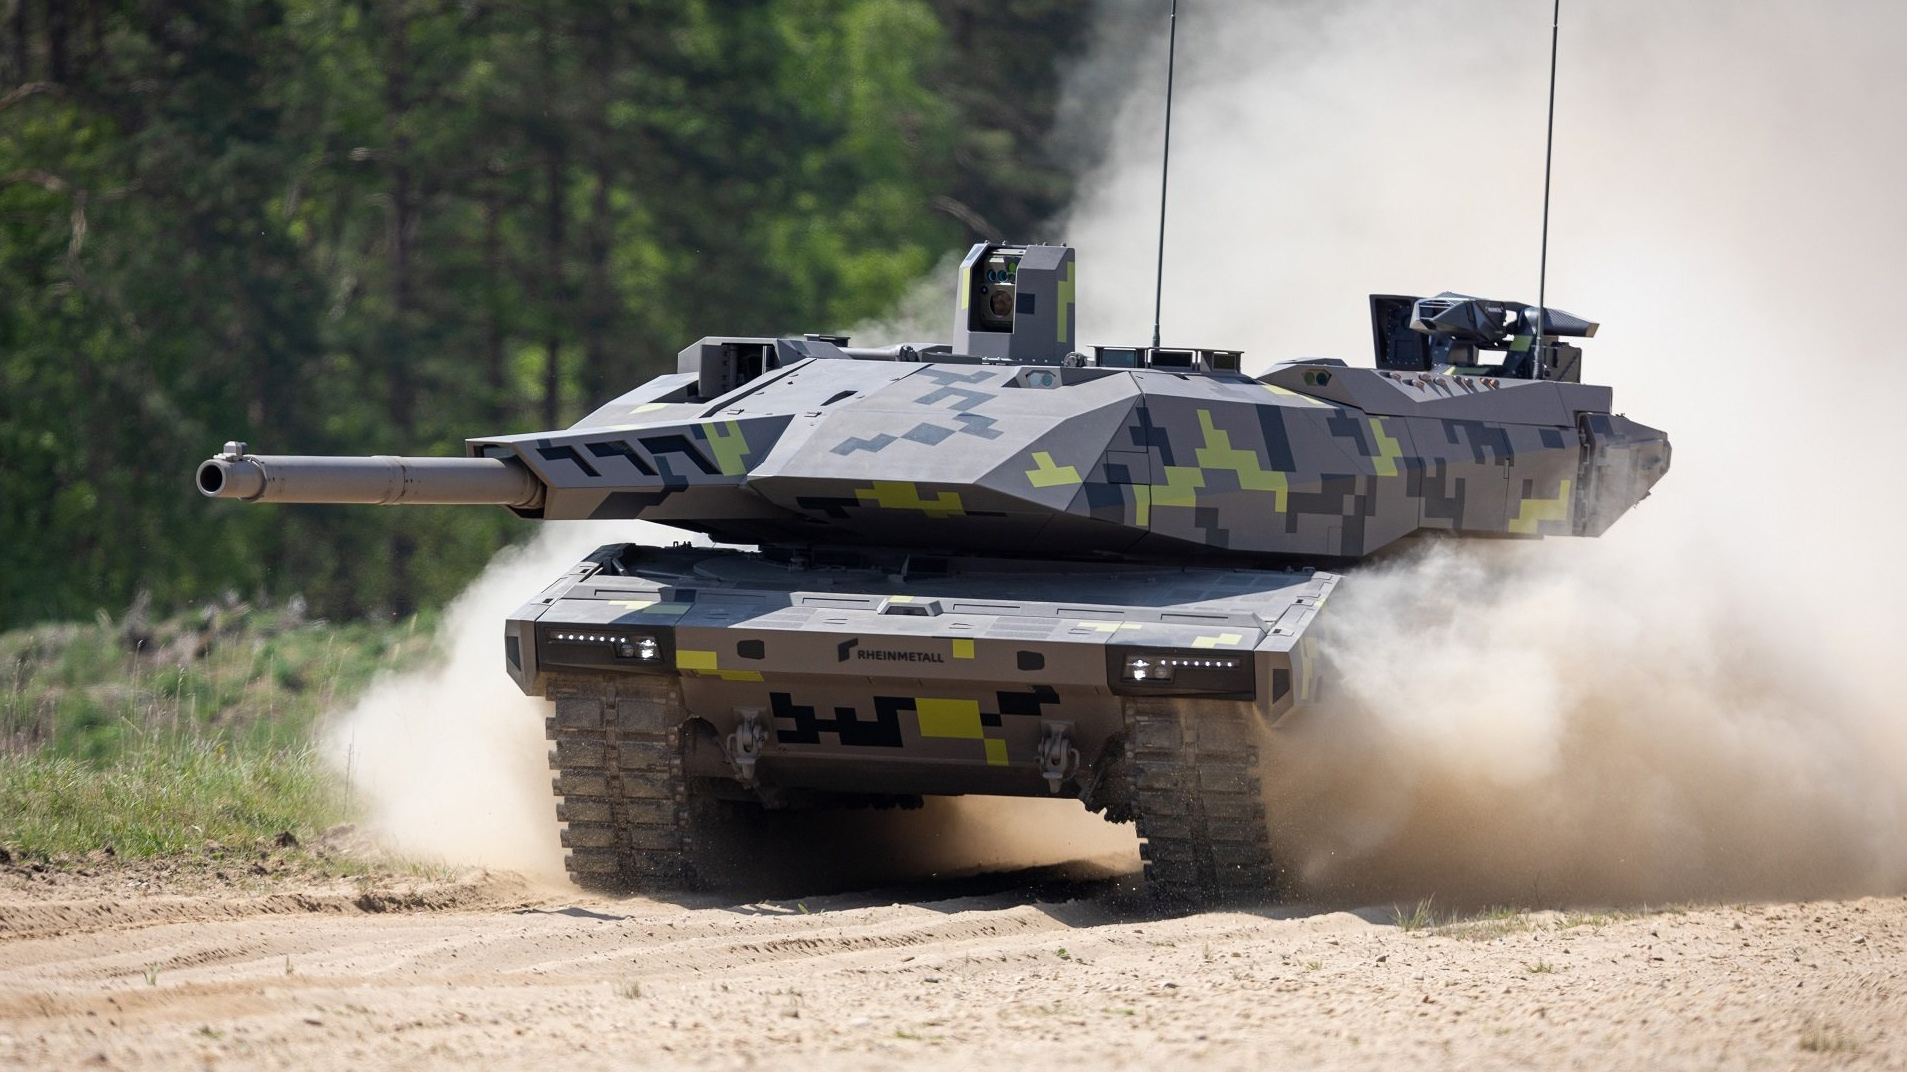 Bladeren verzamelen Heerlijk Dwaal New KF51 Panther Tank Packs Big 130mm Gun Aimed At Aging Leopard 2